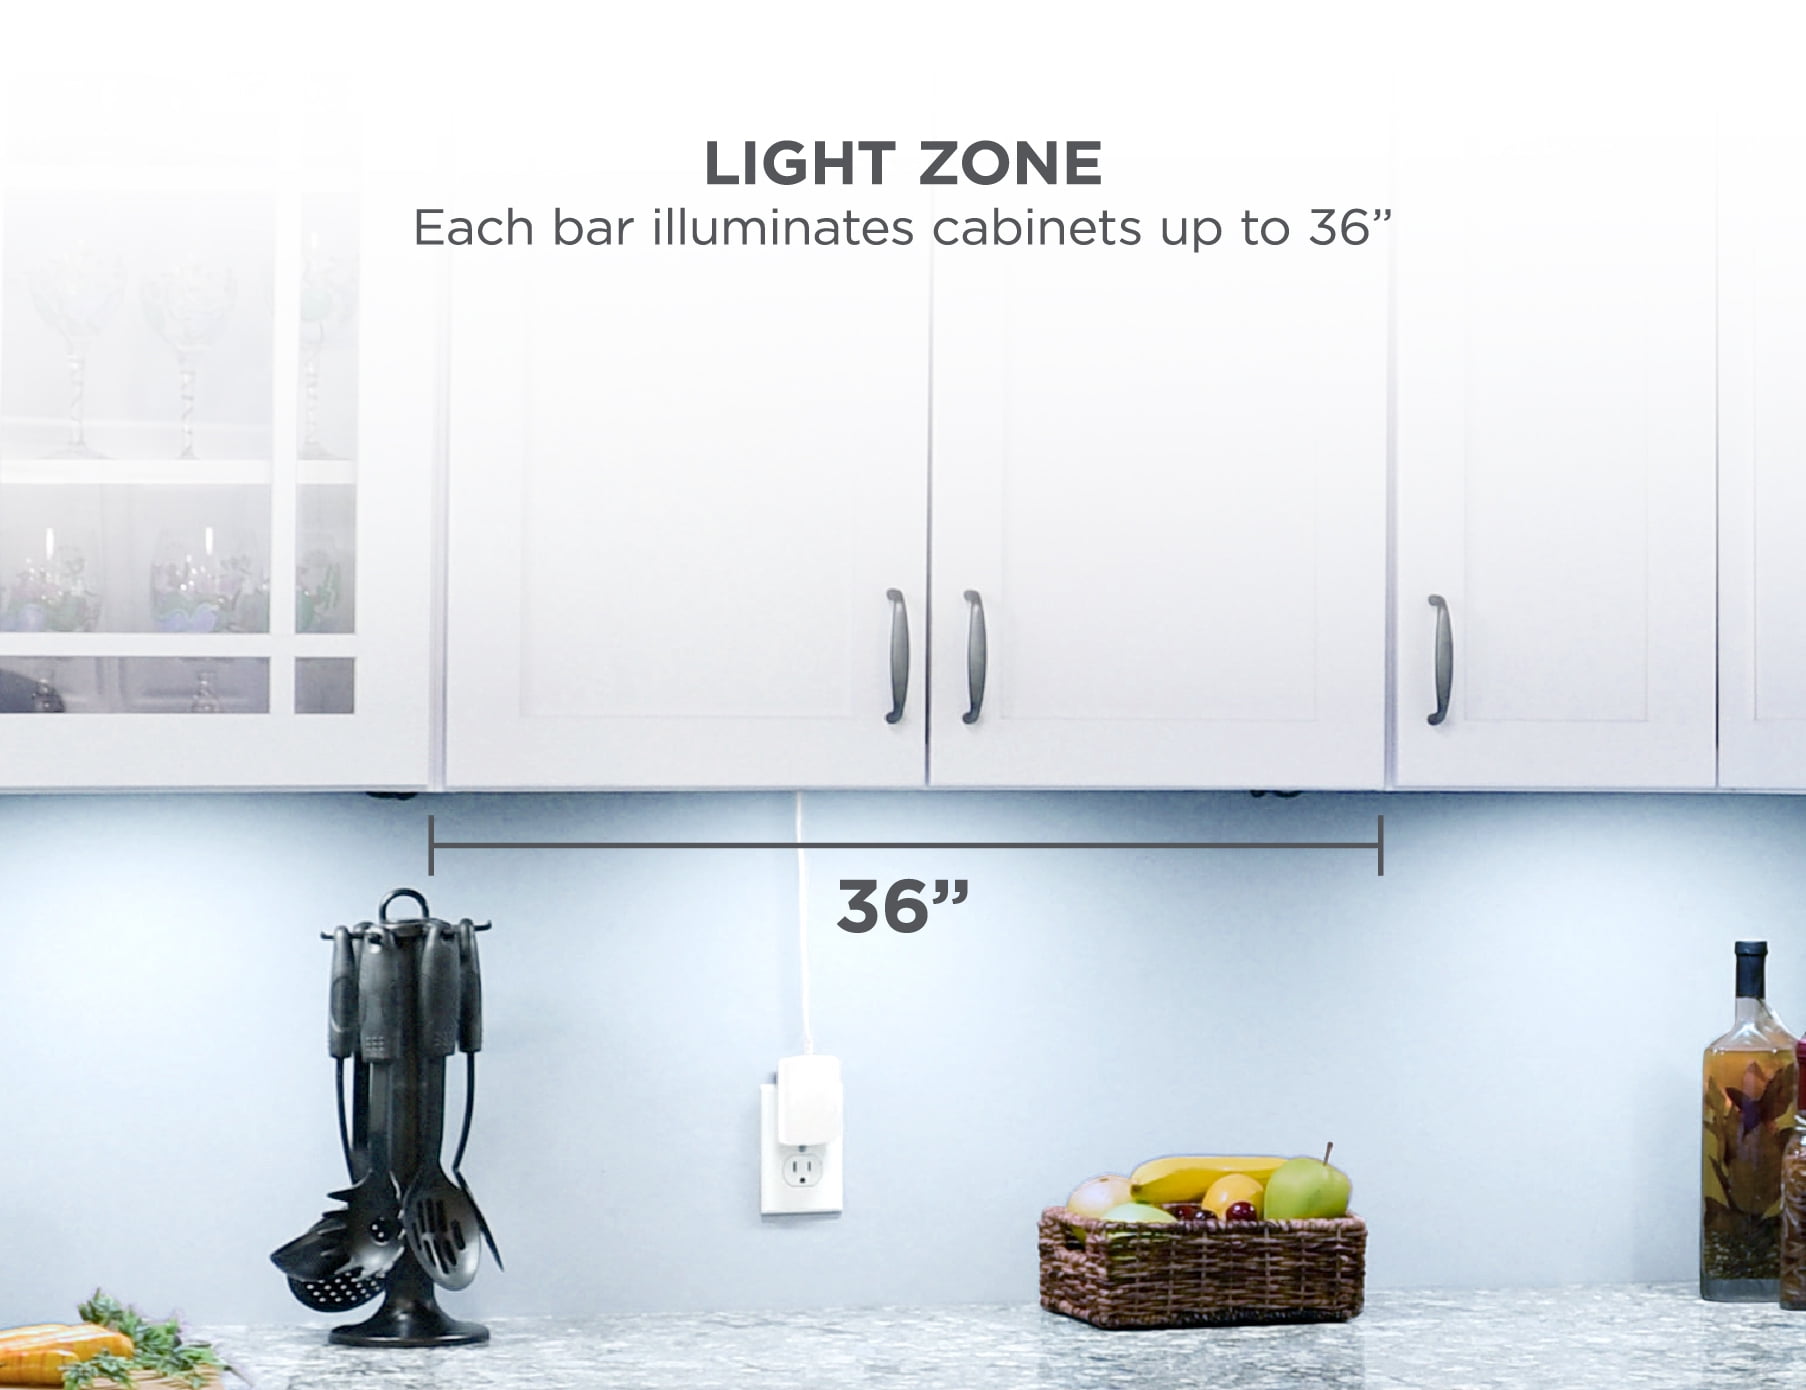 BLACK+DECKER LED Under Cabinet Light Kit, Cool White, Stick up Design,  3-Bars, 6” Each (LEDUC6-3CK) 